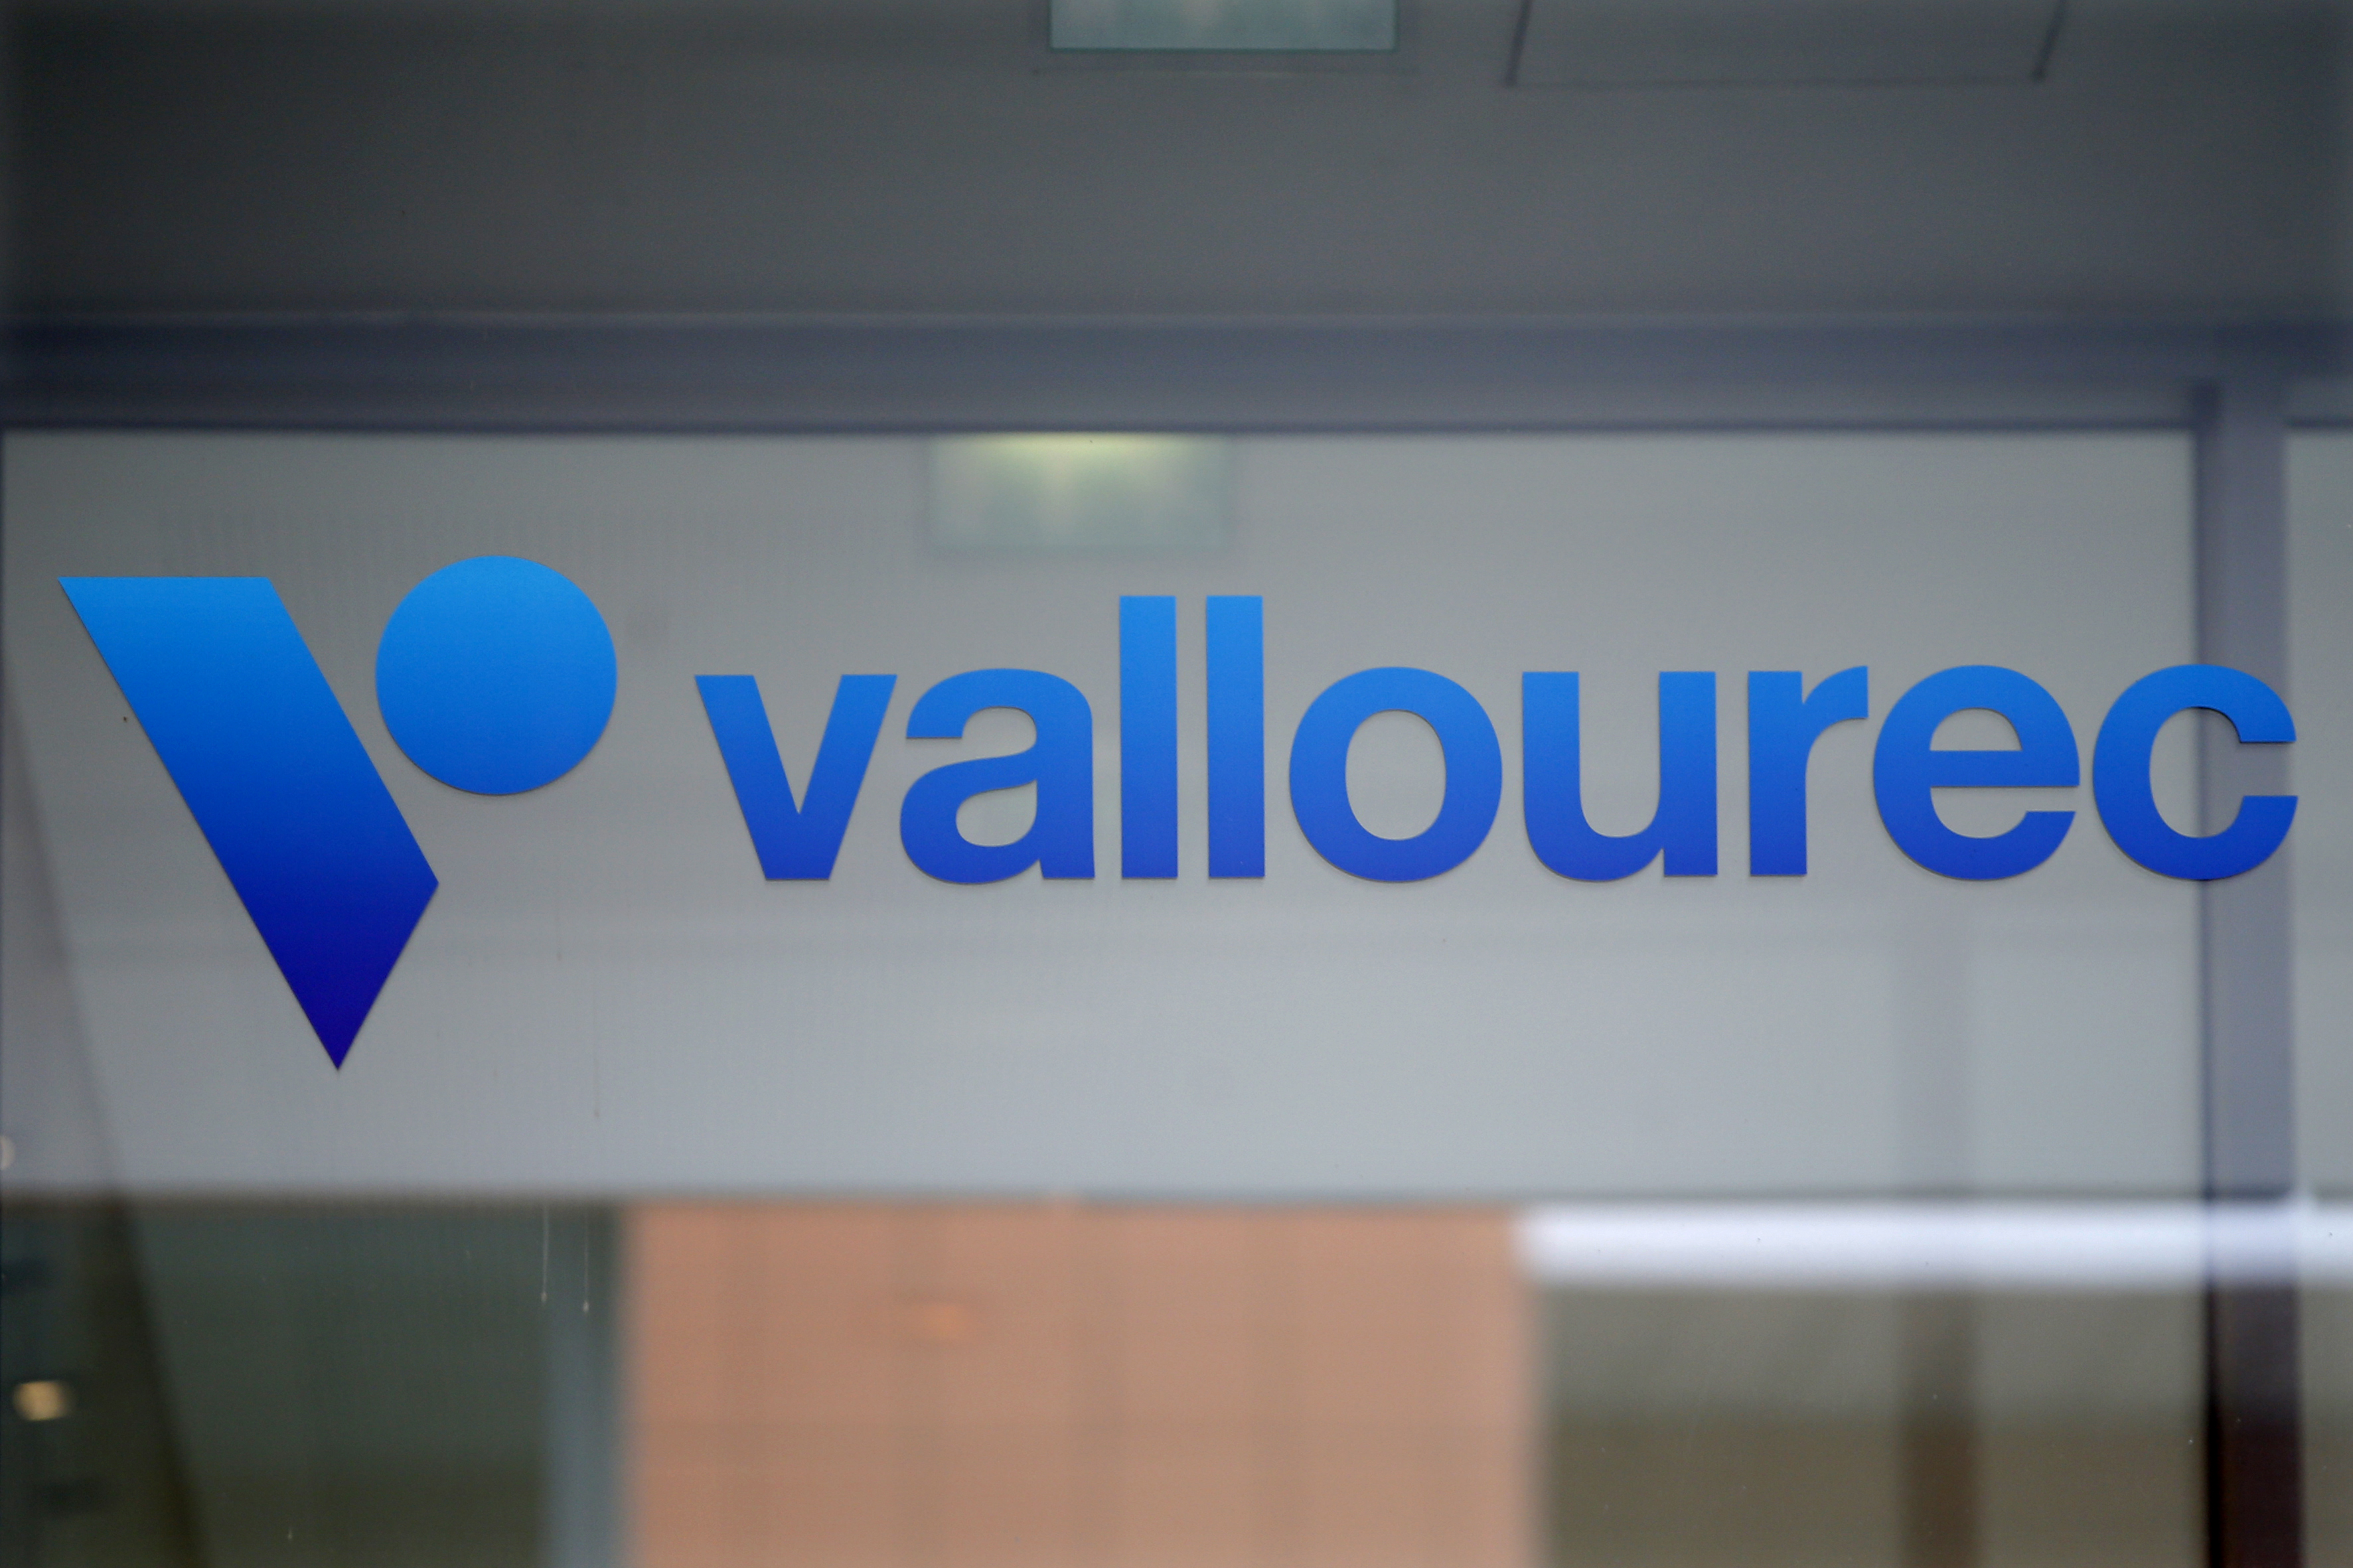 Vallourec va supprimer 320 postes en France : premier plan social de l'ère Borne à Matignon